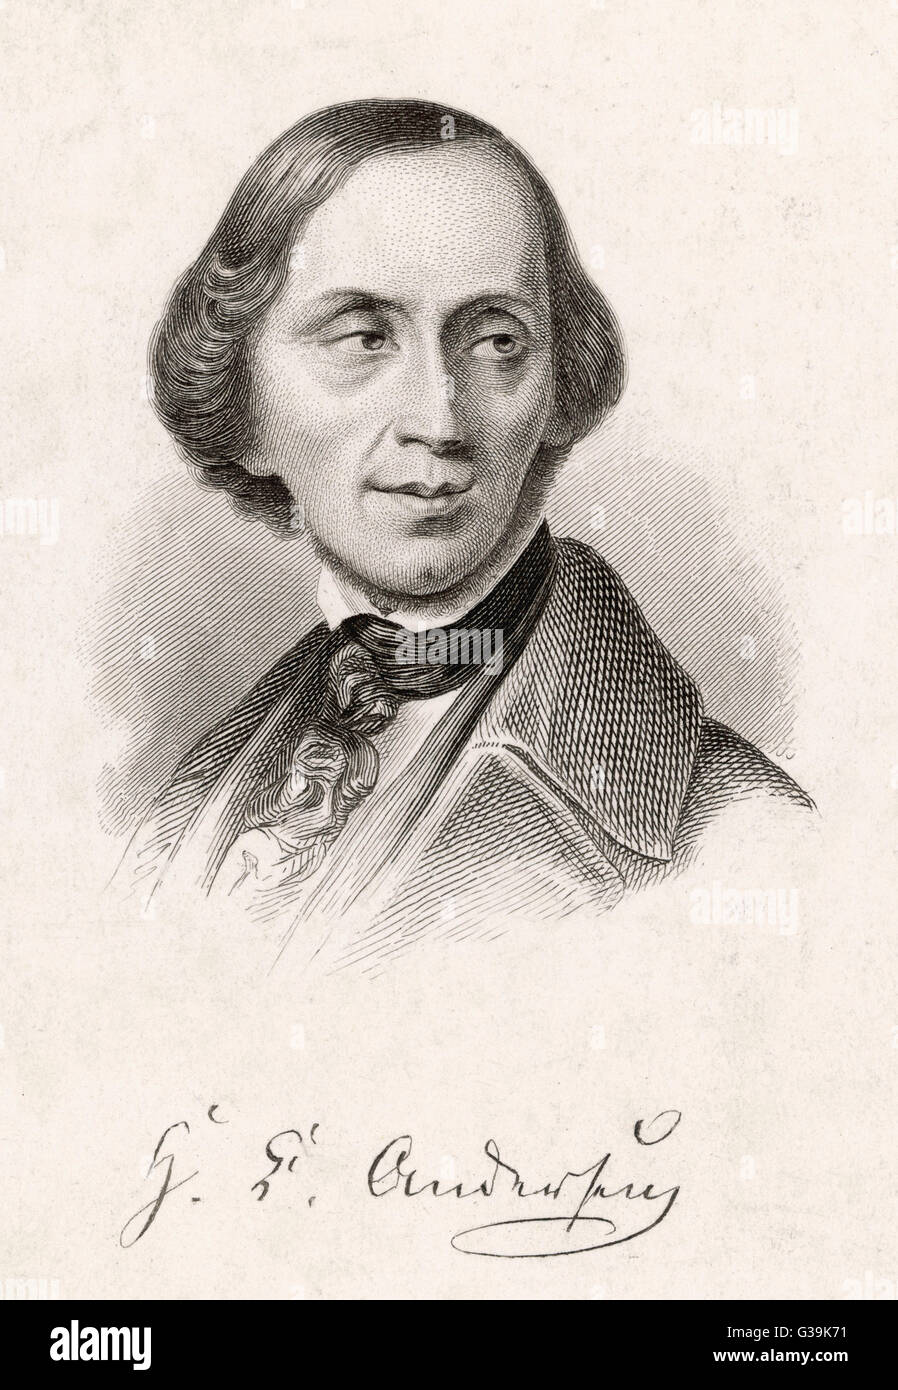 HANS CHRISTIAN ANDERSEN scrittore danese data: 1805 - 1875 Foto Stock